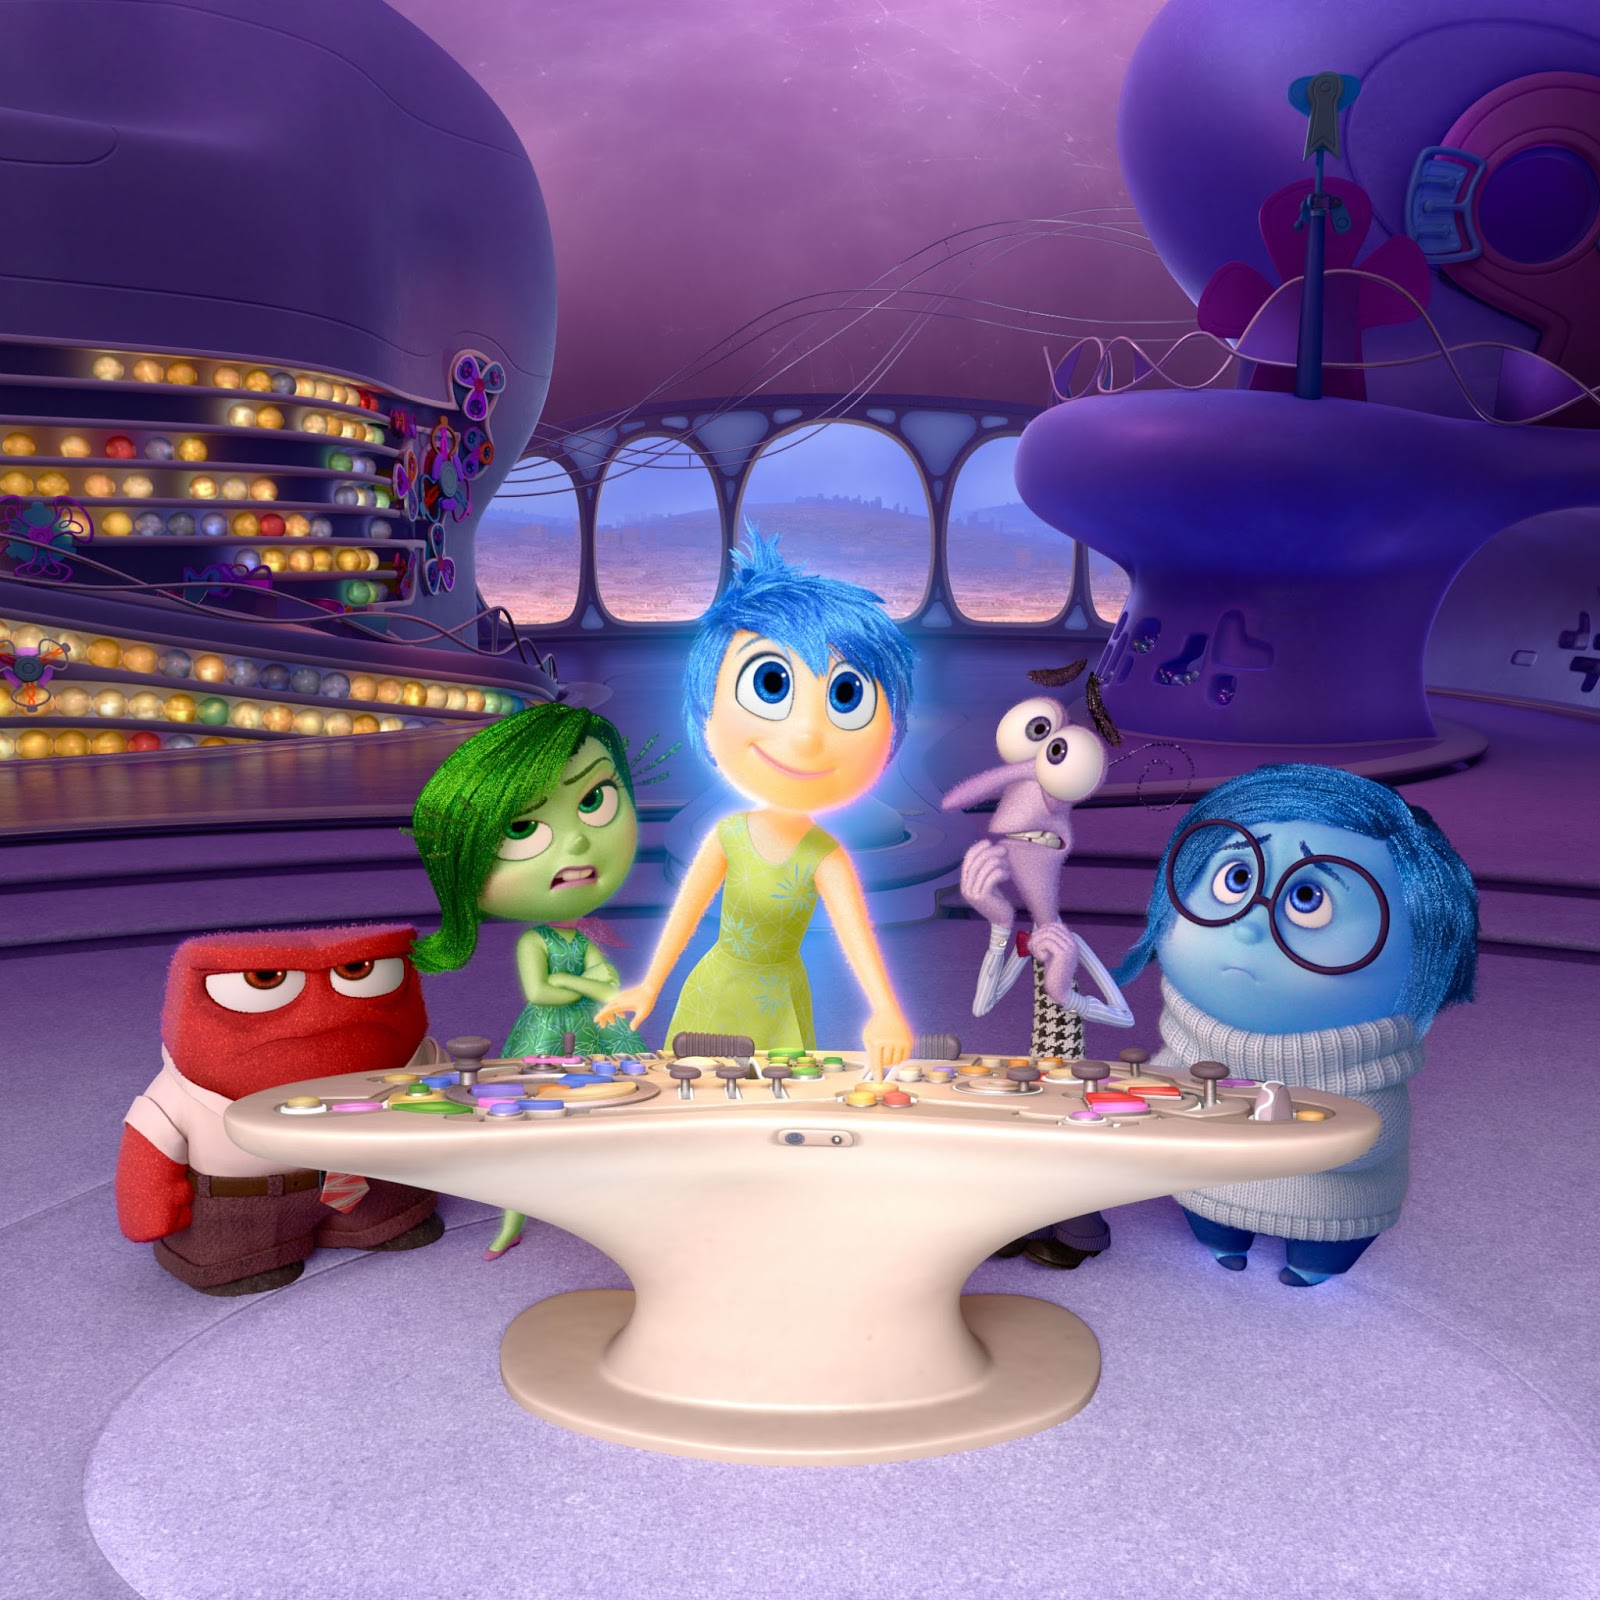 Vice Versa de Pete Docter image Disney Pixar